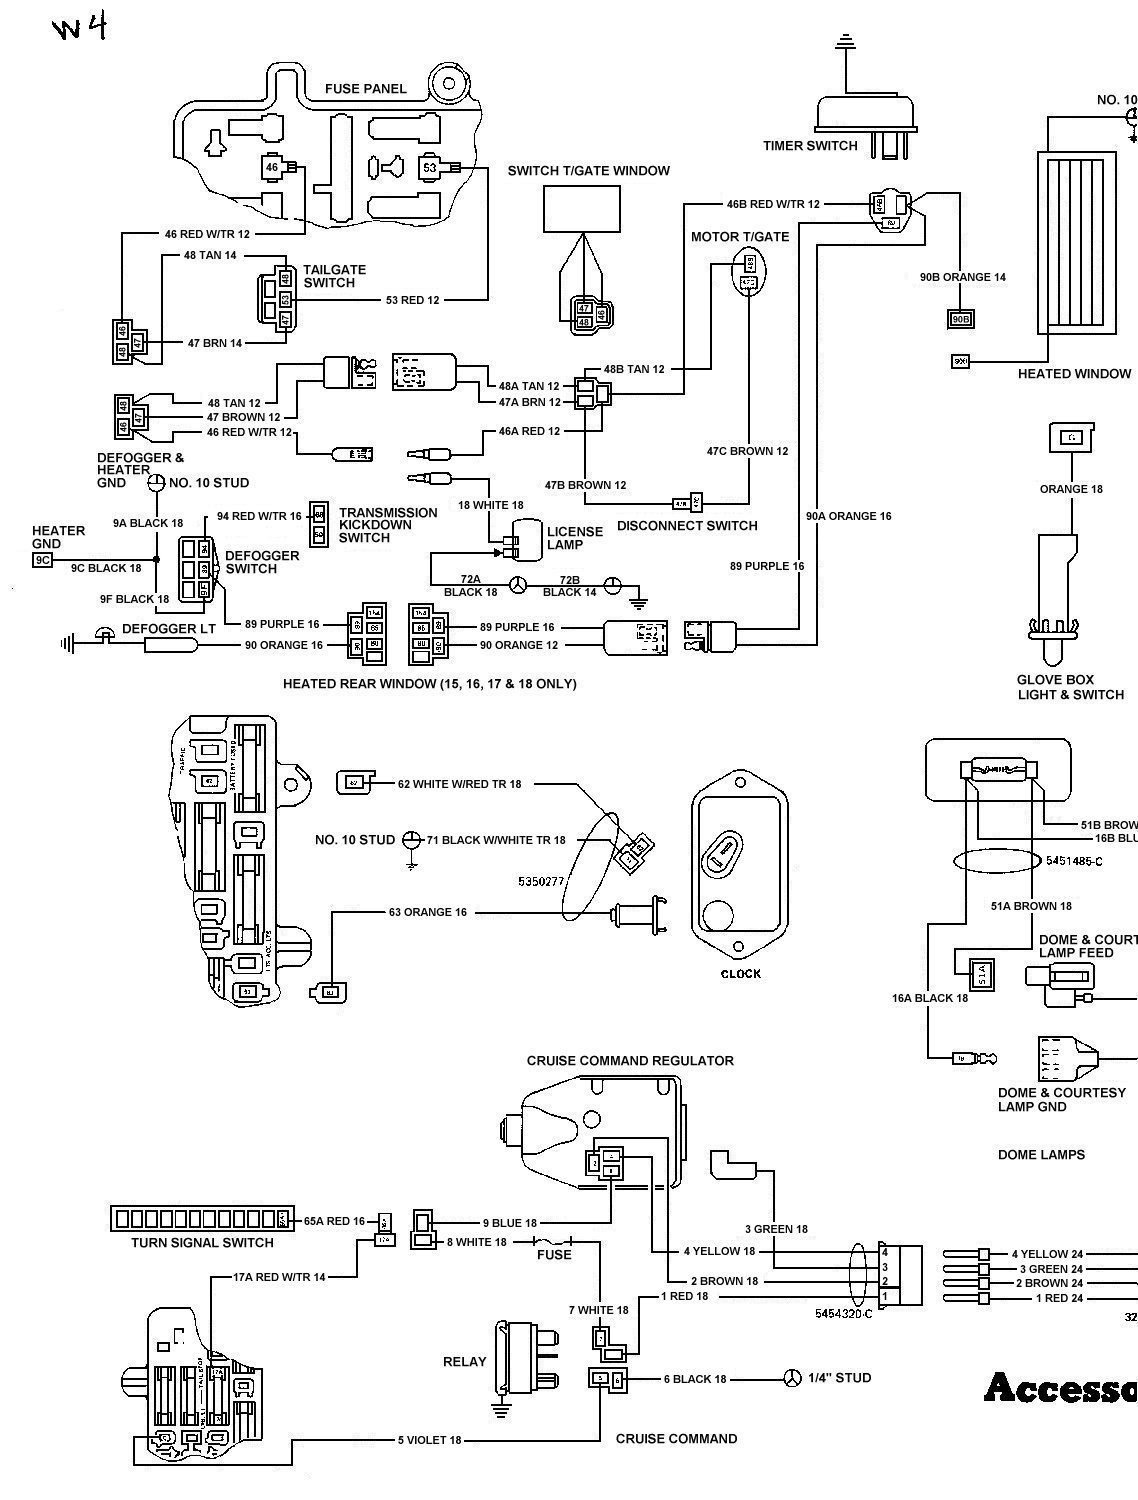 Cable Diagram 1